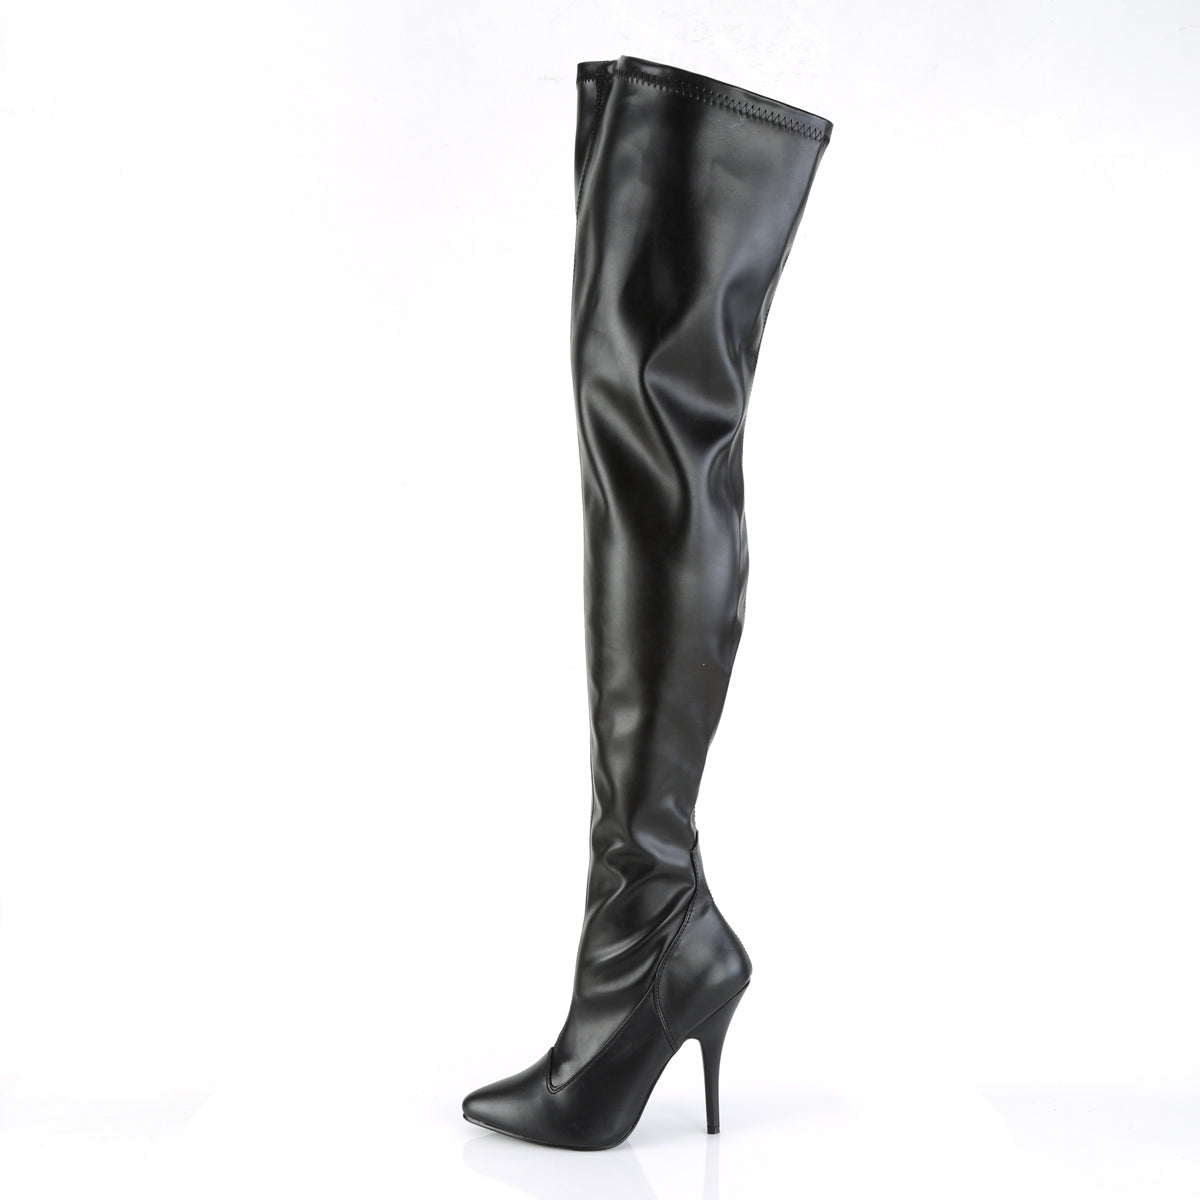 SEDUCE-3000 Pleaser 5 Inch Heel Black Fetish Footwear-Pleaser- Sexy Shoes Pole Dance Heels